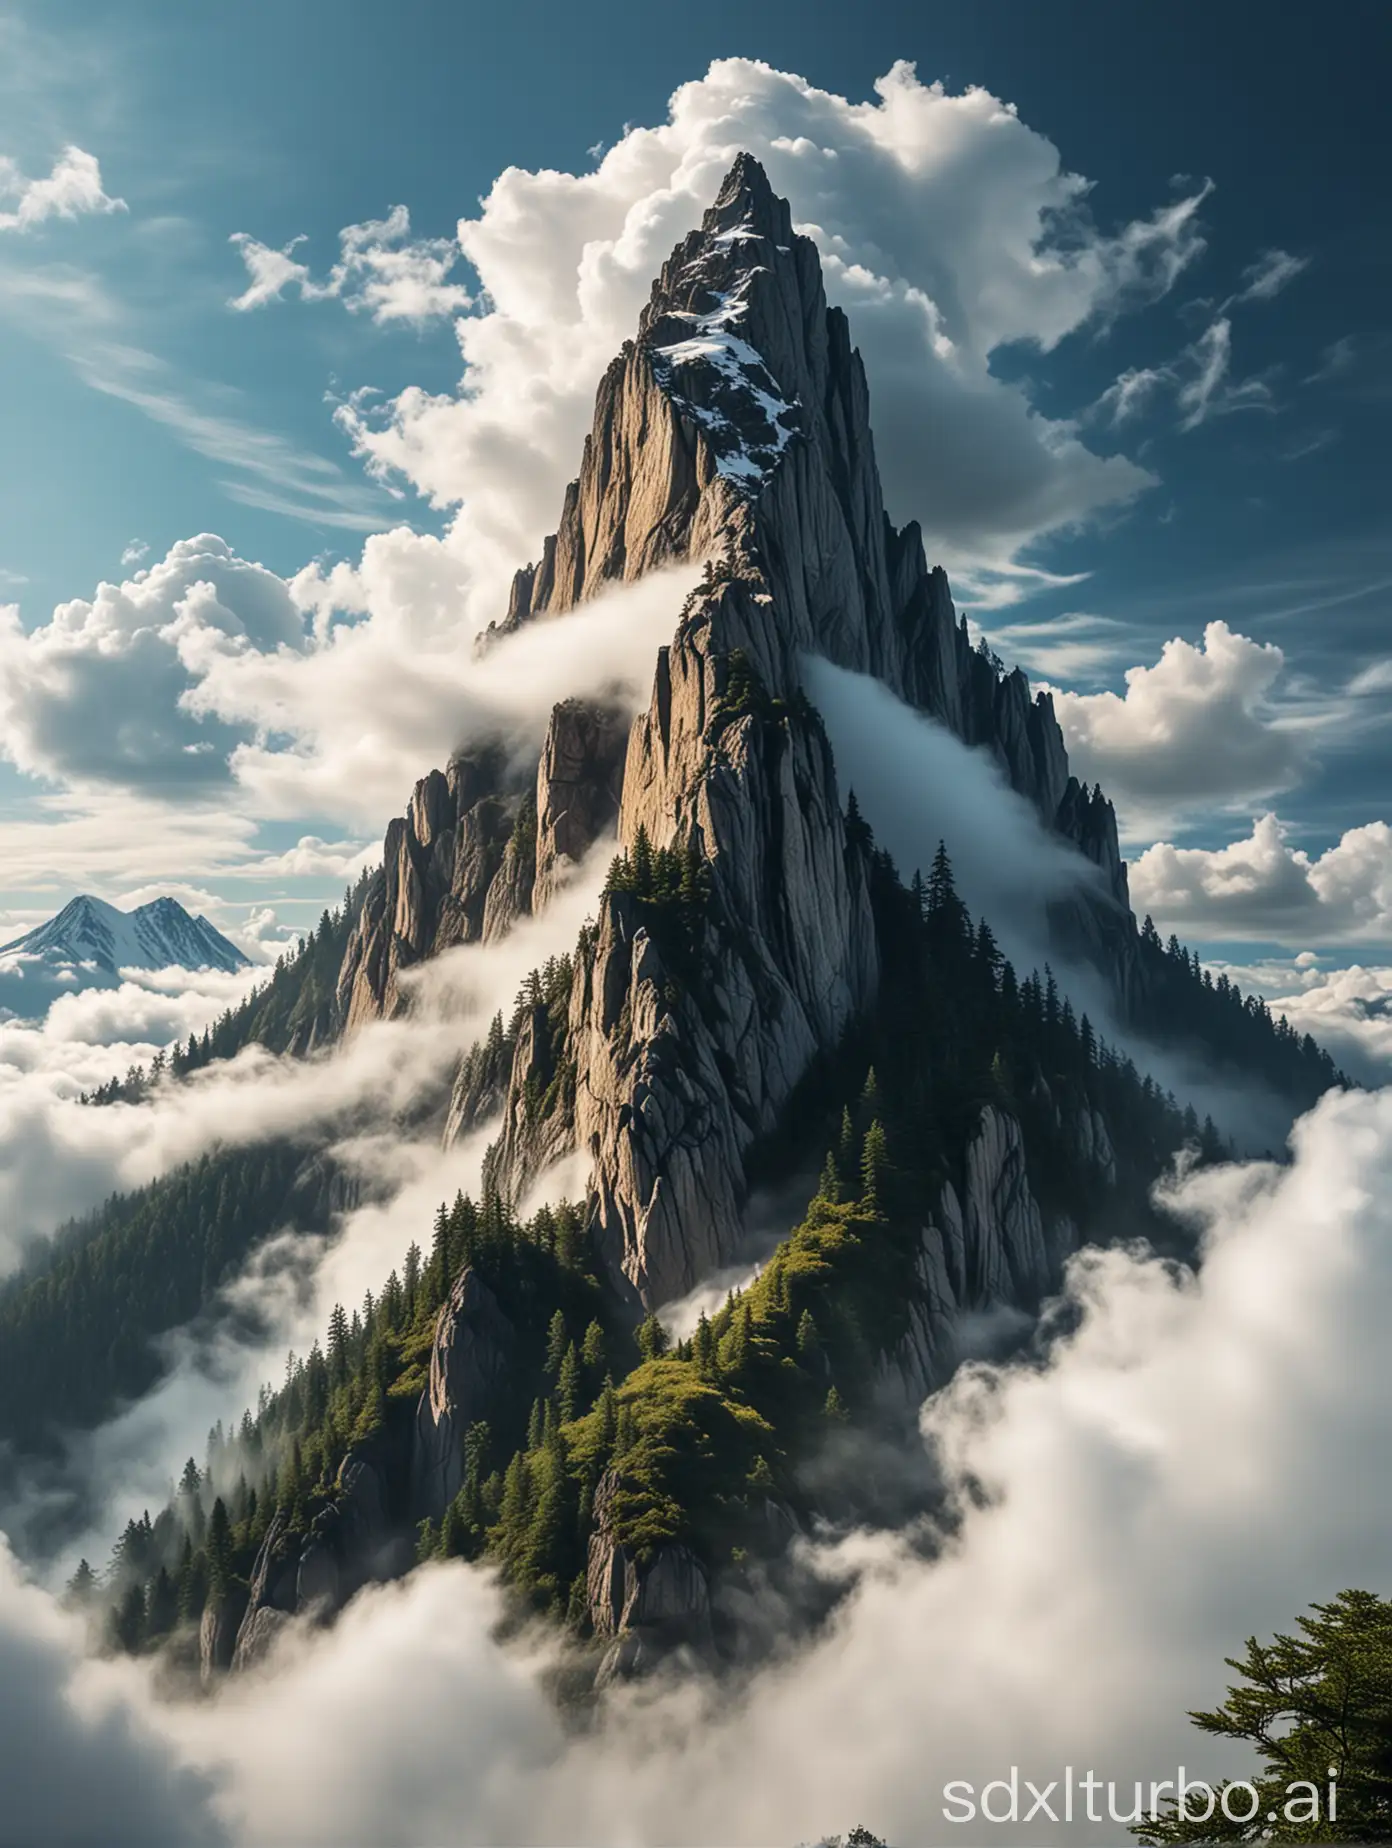 Clouds surround the mountain peak, fairyland